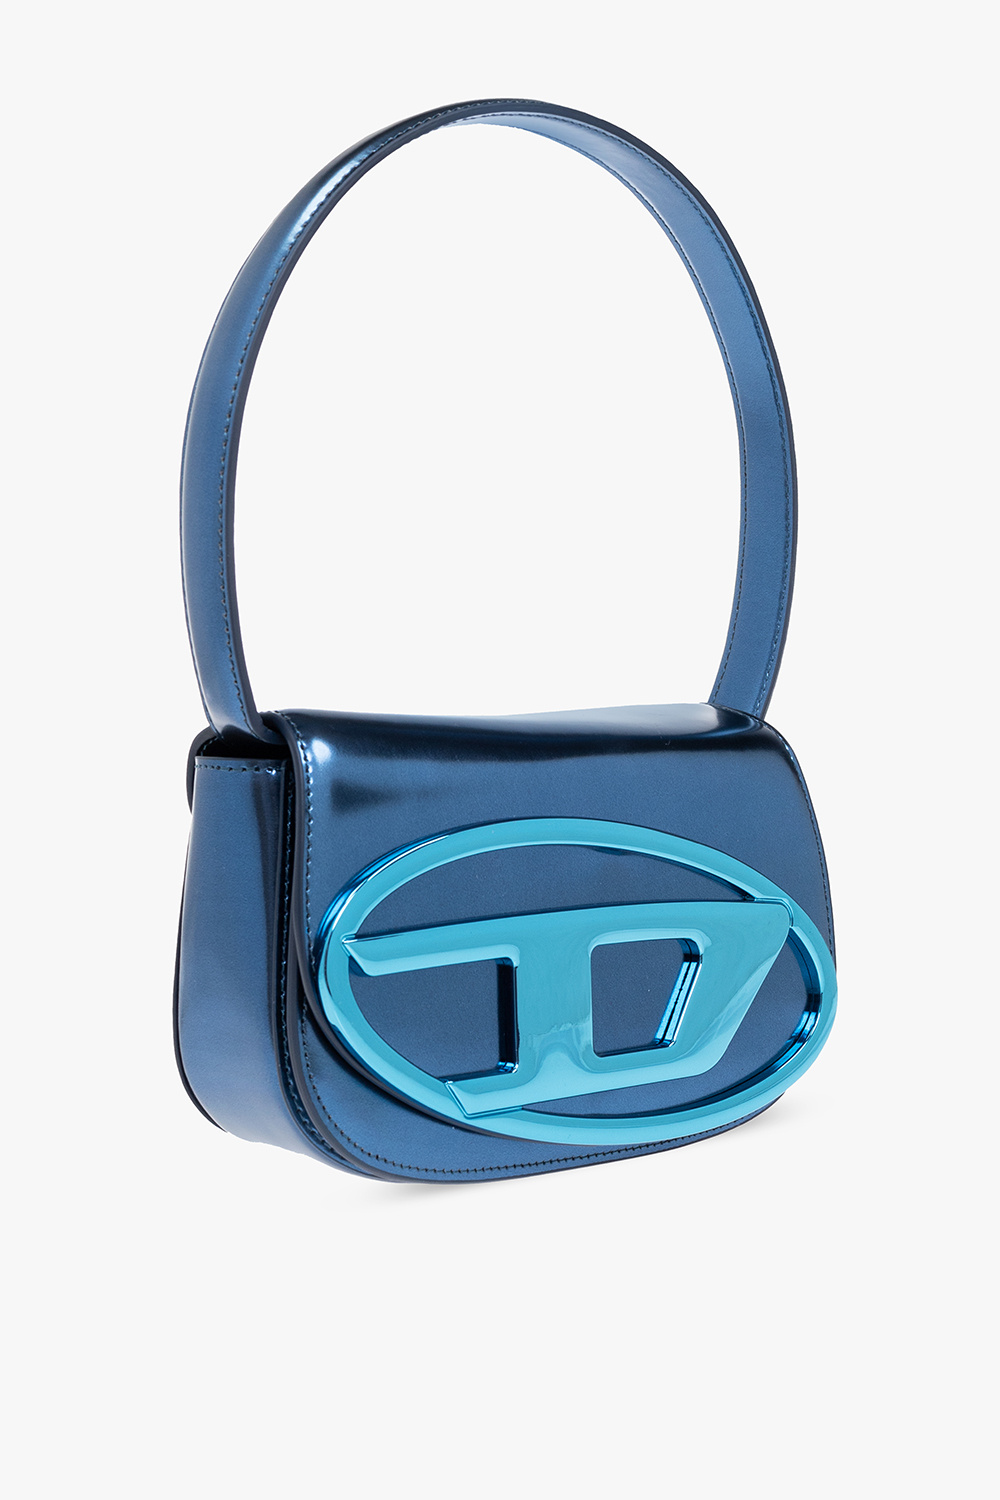 Diesel '1DR' shoulder bag | Women's Bags | Vitkac